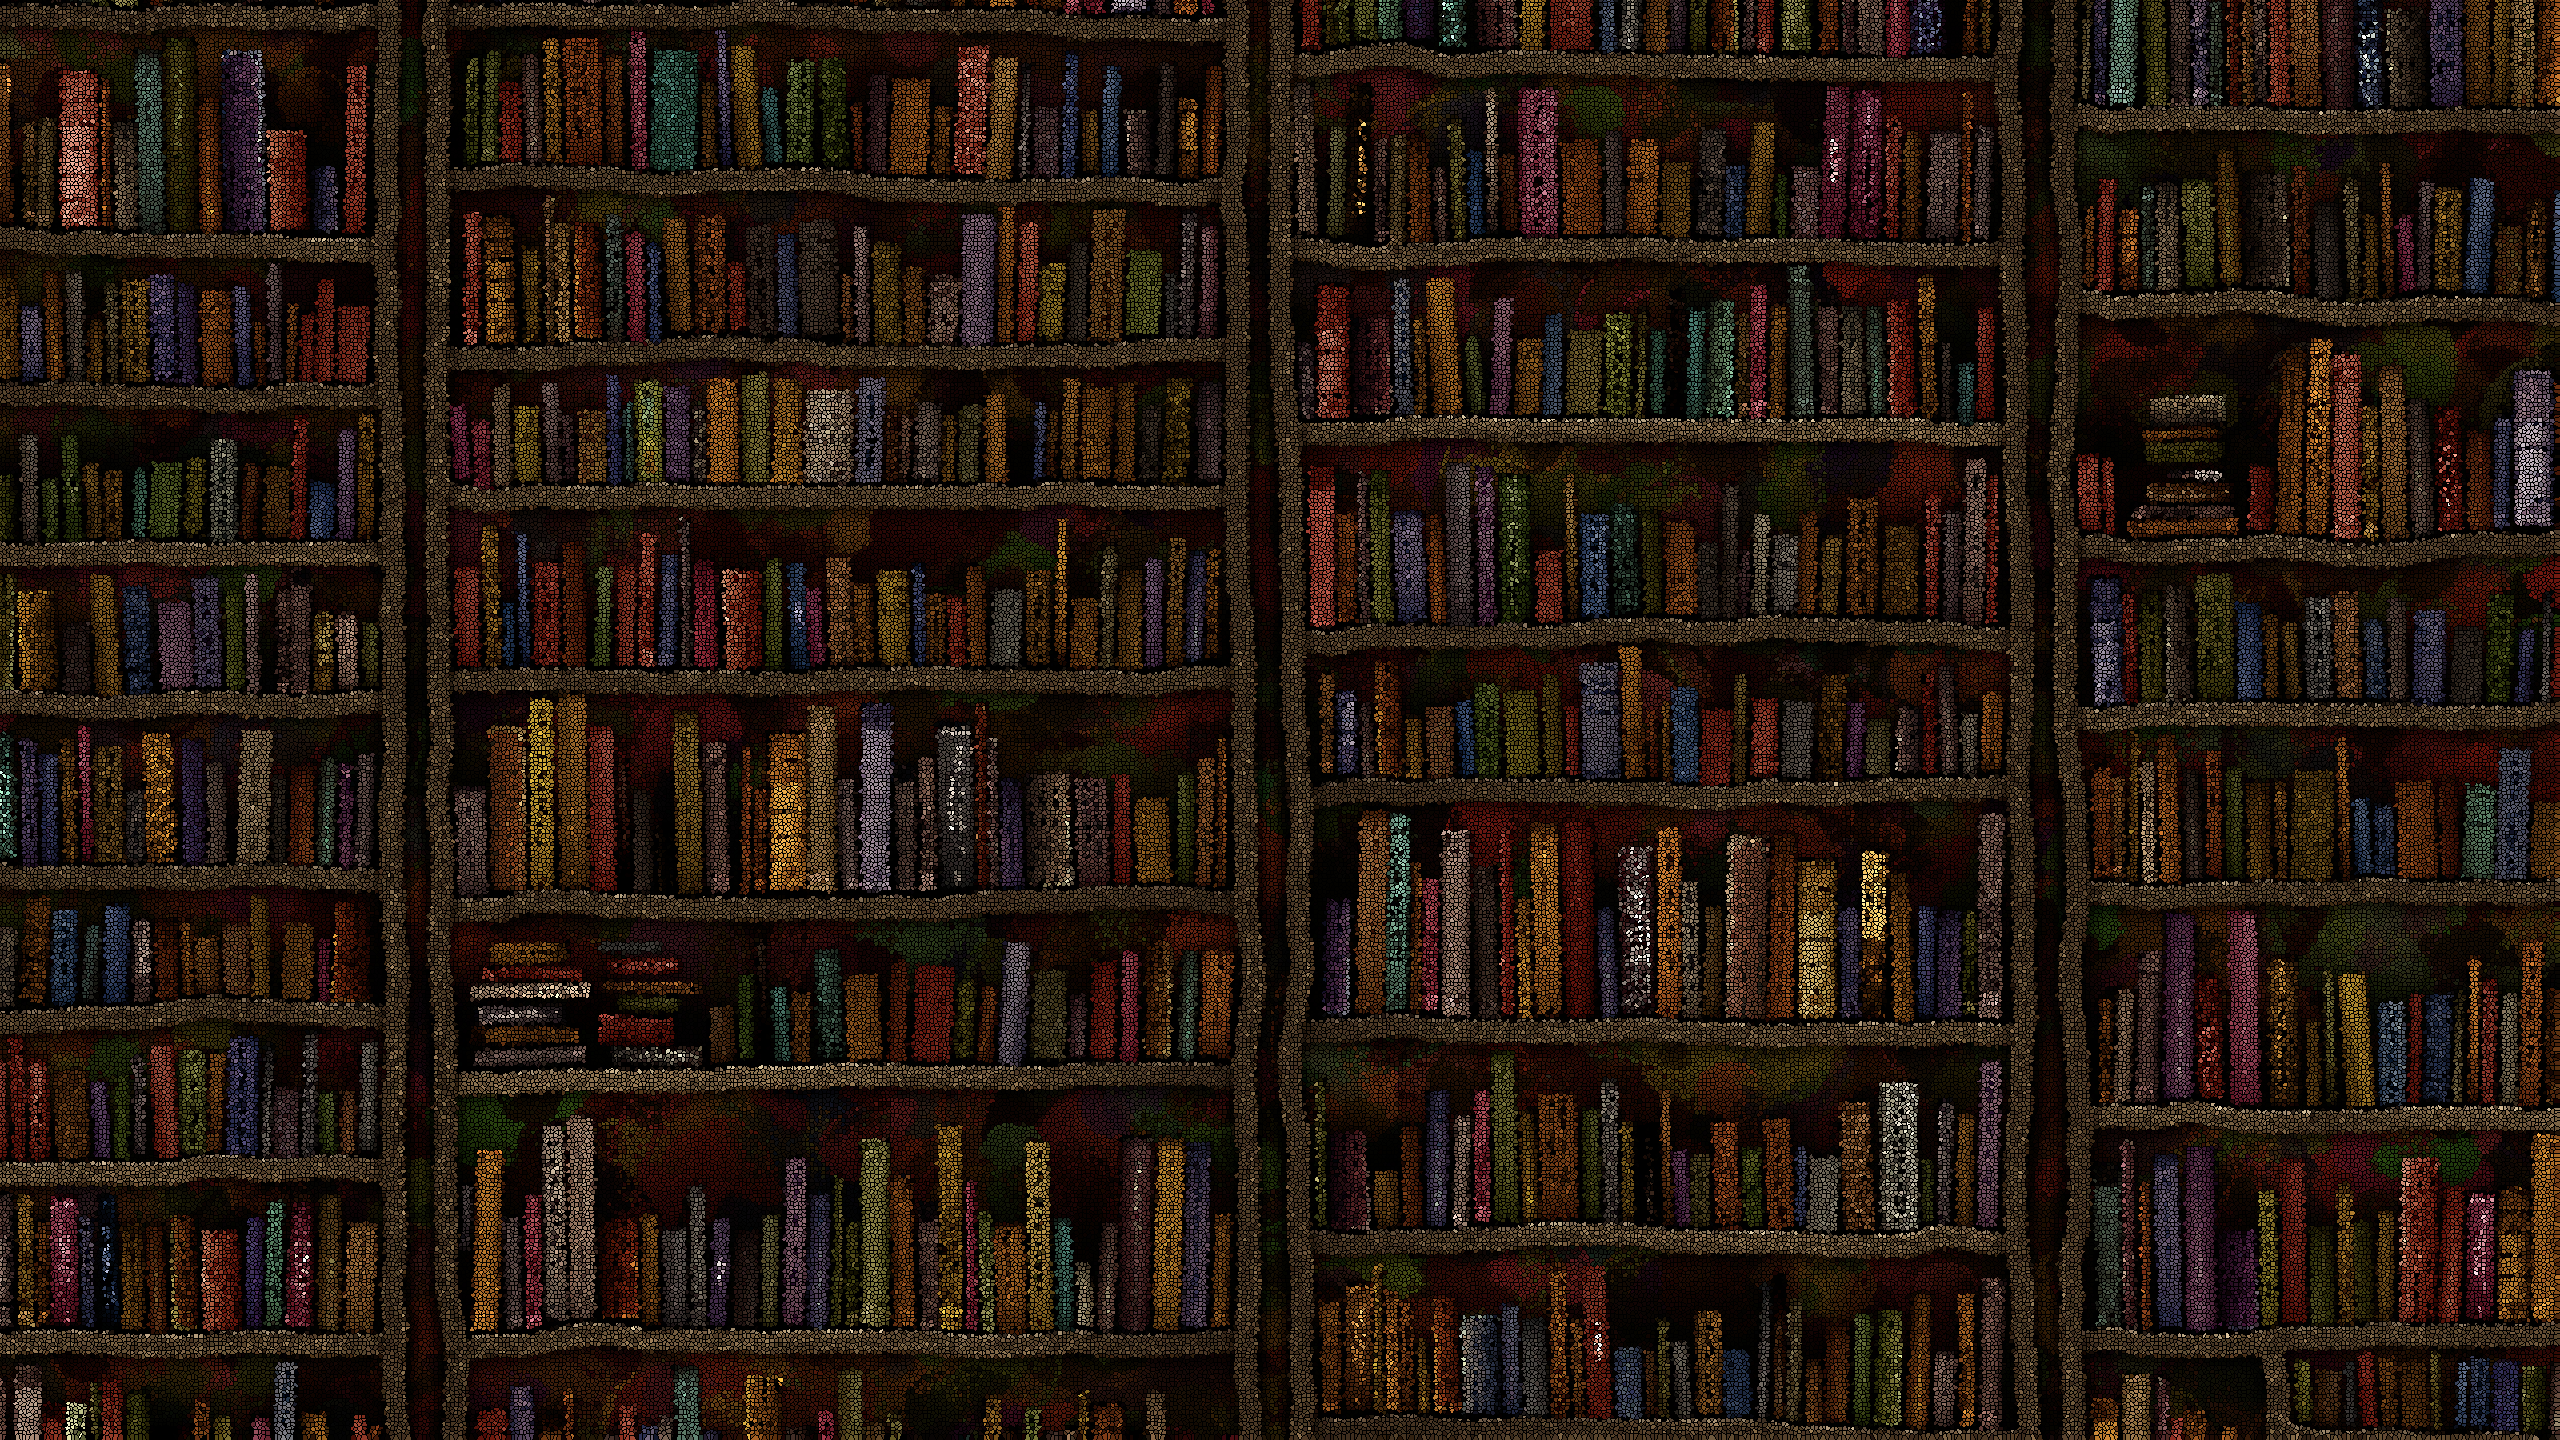 Vladstudio Library Mosaic2 by dcalq3dneopl on DeviantArt